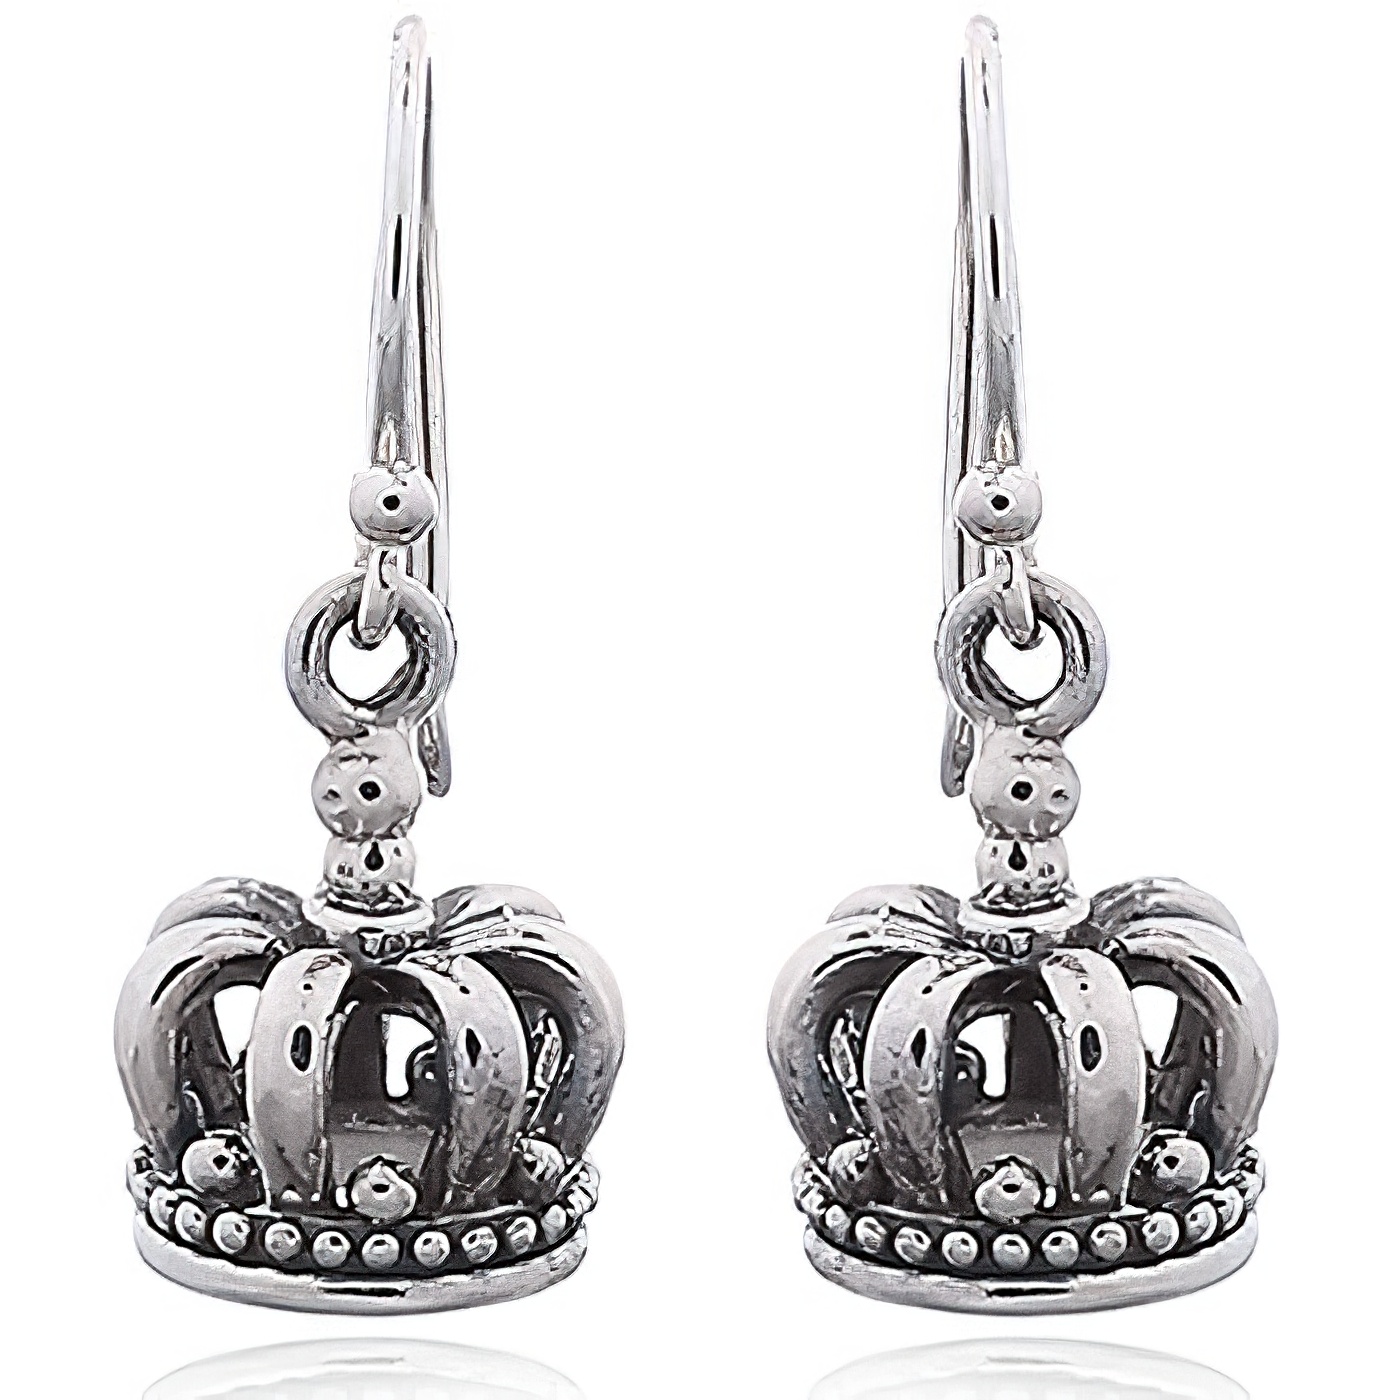 Crown Dangle Earrings in 925 Silver by BeYindi 